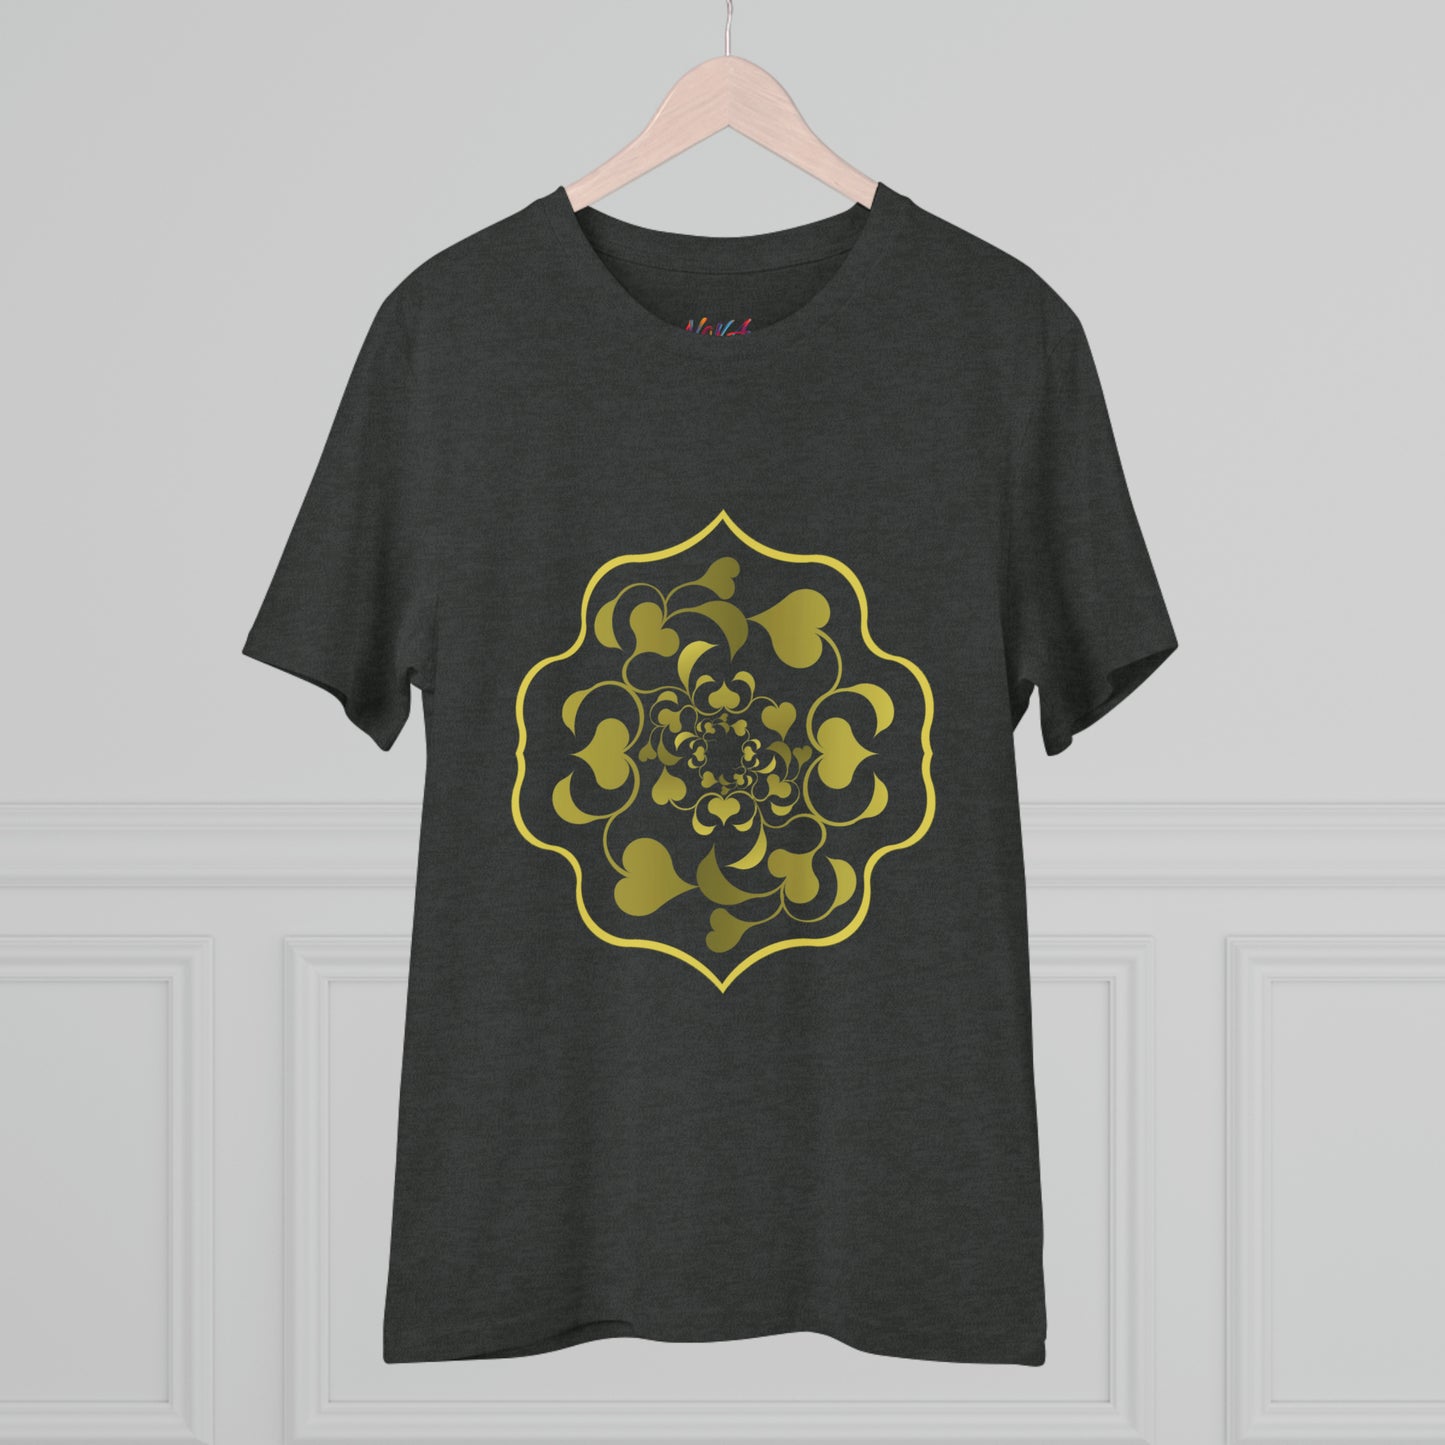 Organic Creator T-shirt - Unisex - Fraflower